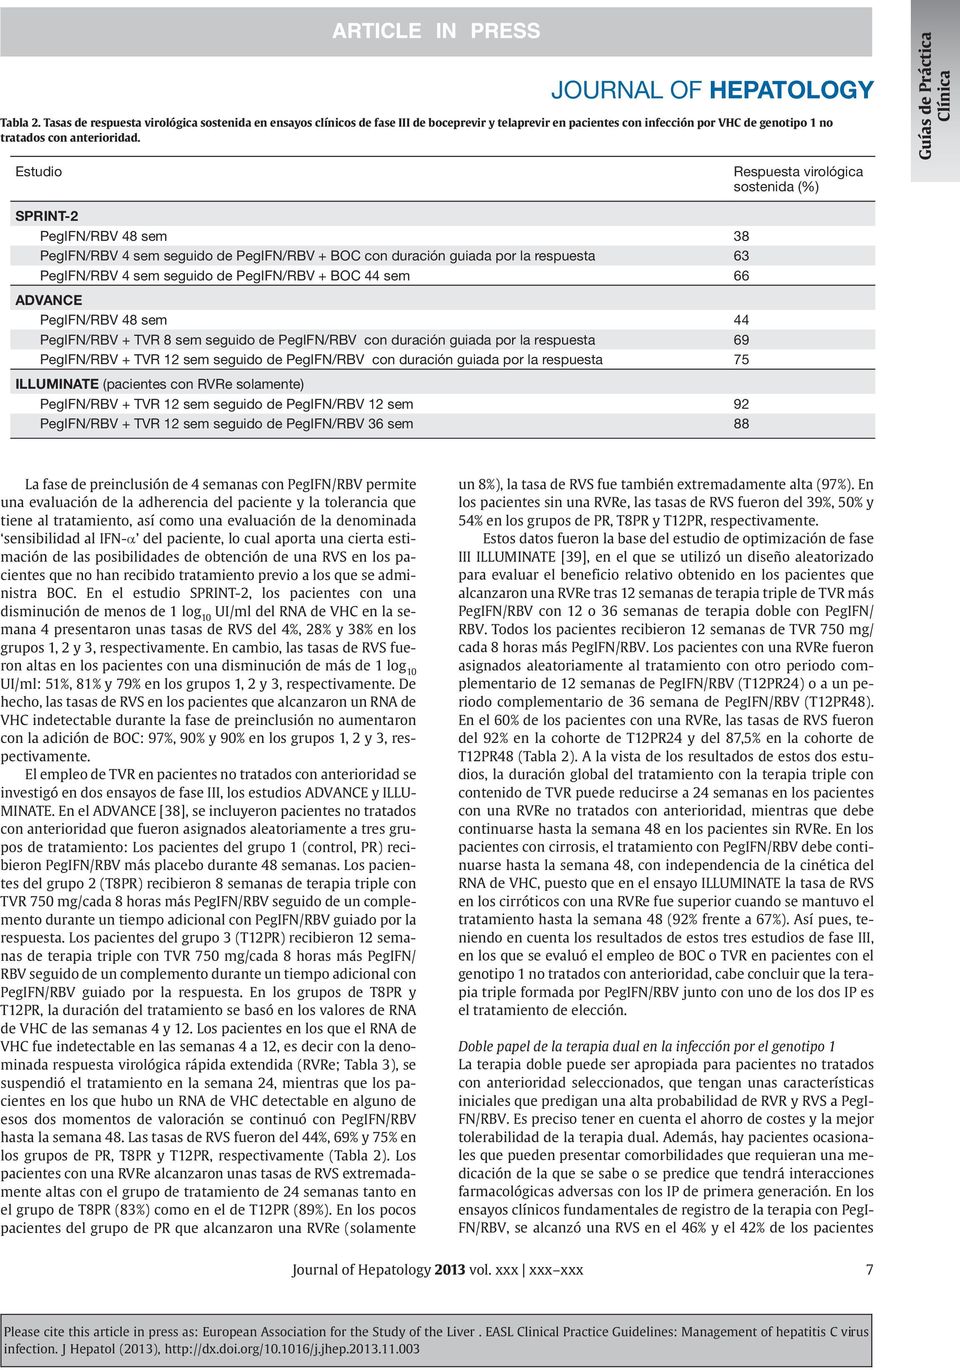 Estudio Respuesta virológica sostenida (%) Guías de Práctica SPRINT-2 PegIFN/RBV 48 sem 38 PegIFN/RBV 4 sem seguido de PegIFN/RBV + BOC con duración guiada por la respuesta 63 PegIFN/RBV 4 sem